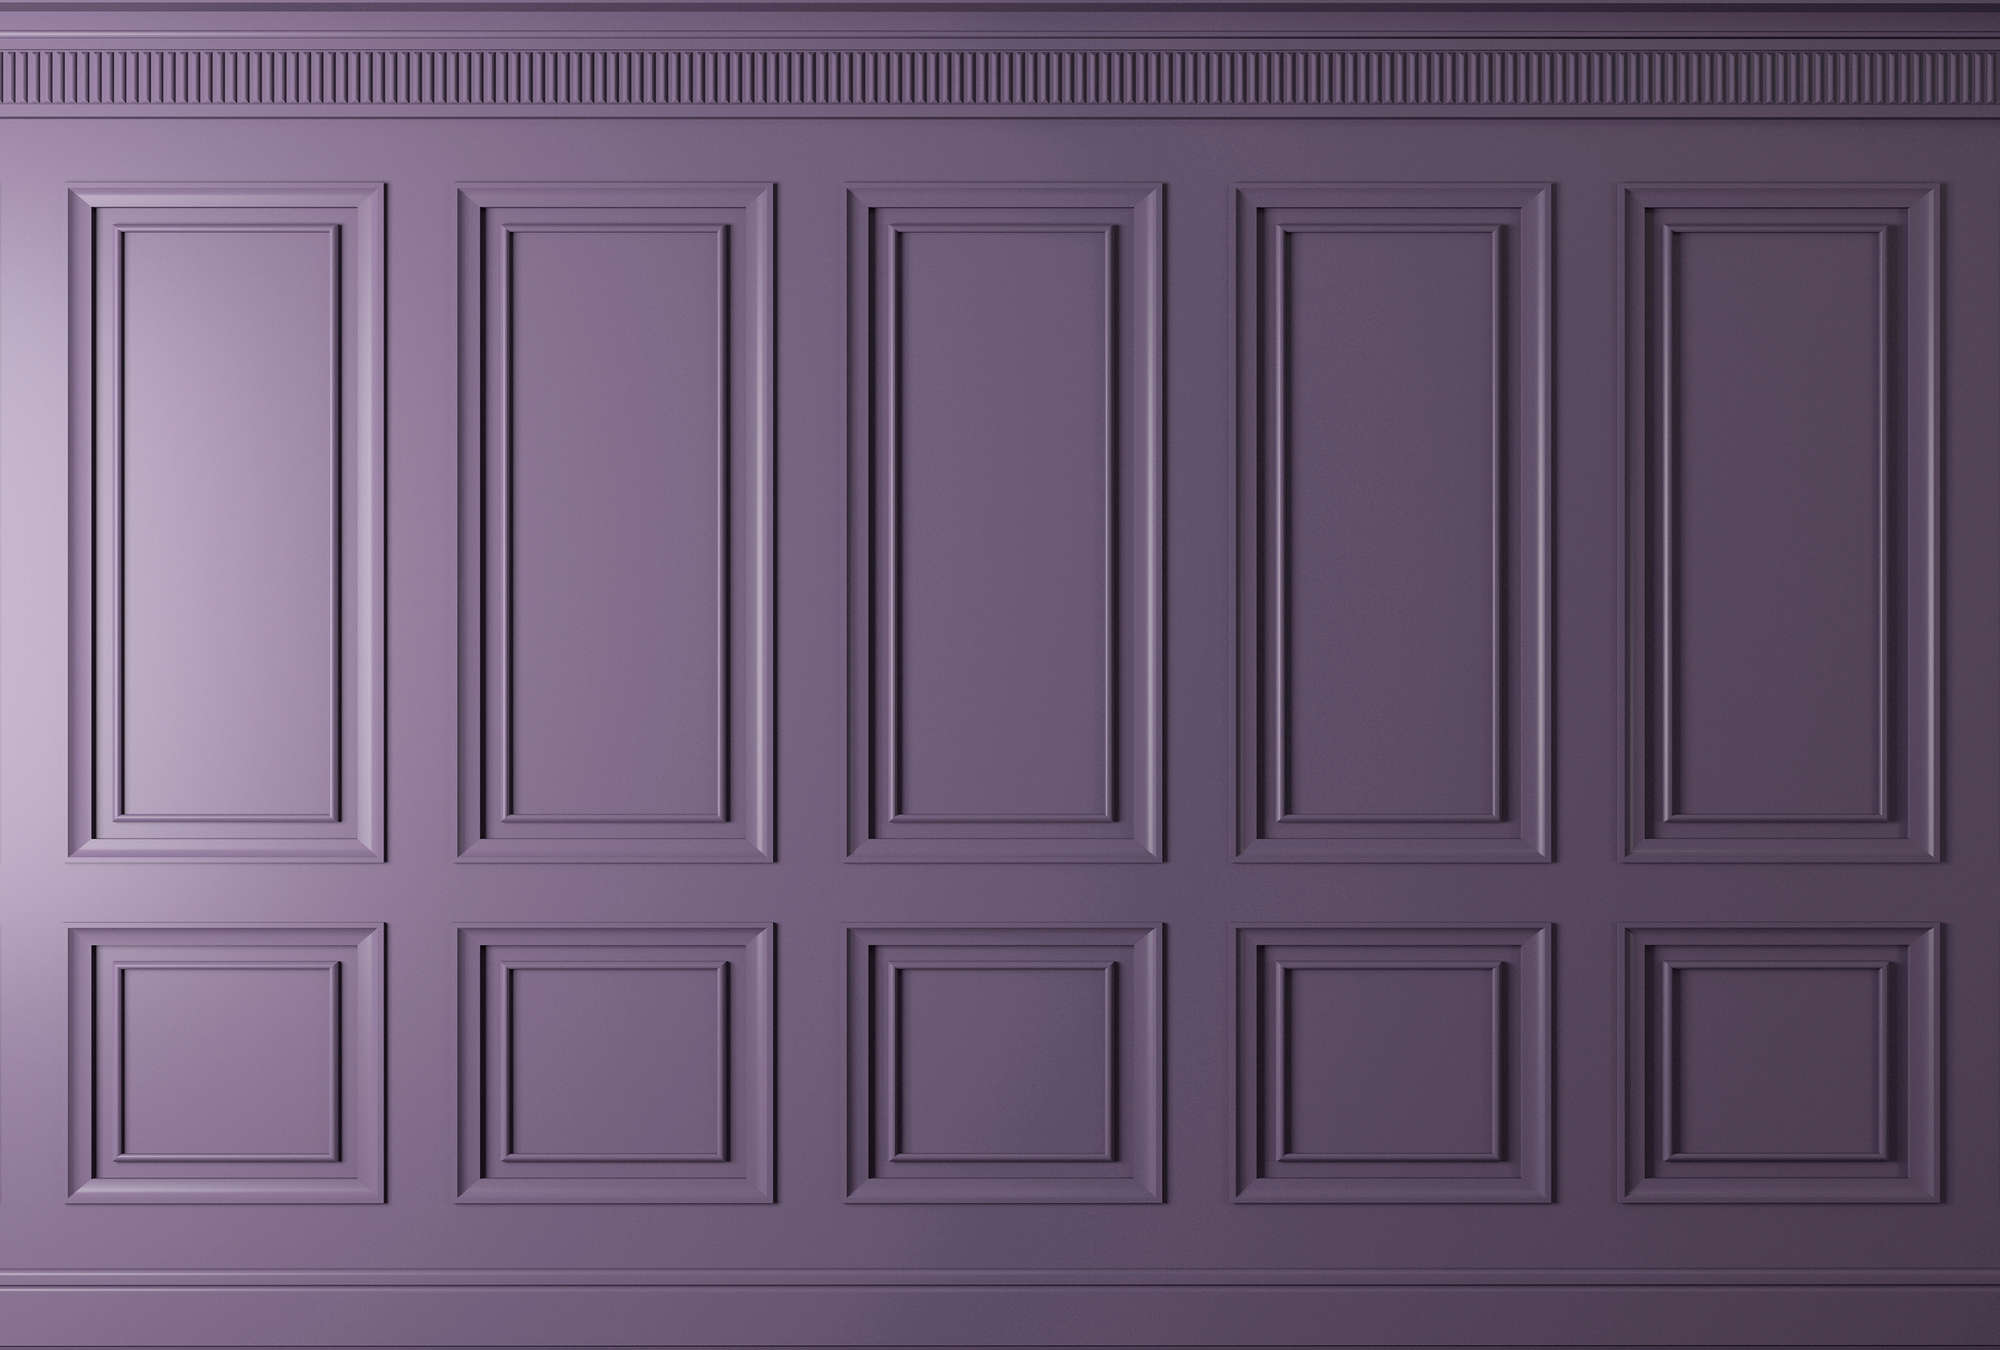             Kensington 3 - Carta da parati 3D per rivestimenti in legno viola scuro, Viola
        